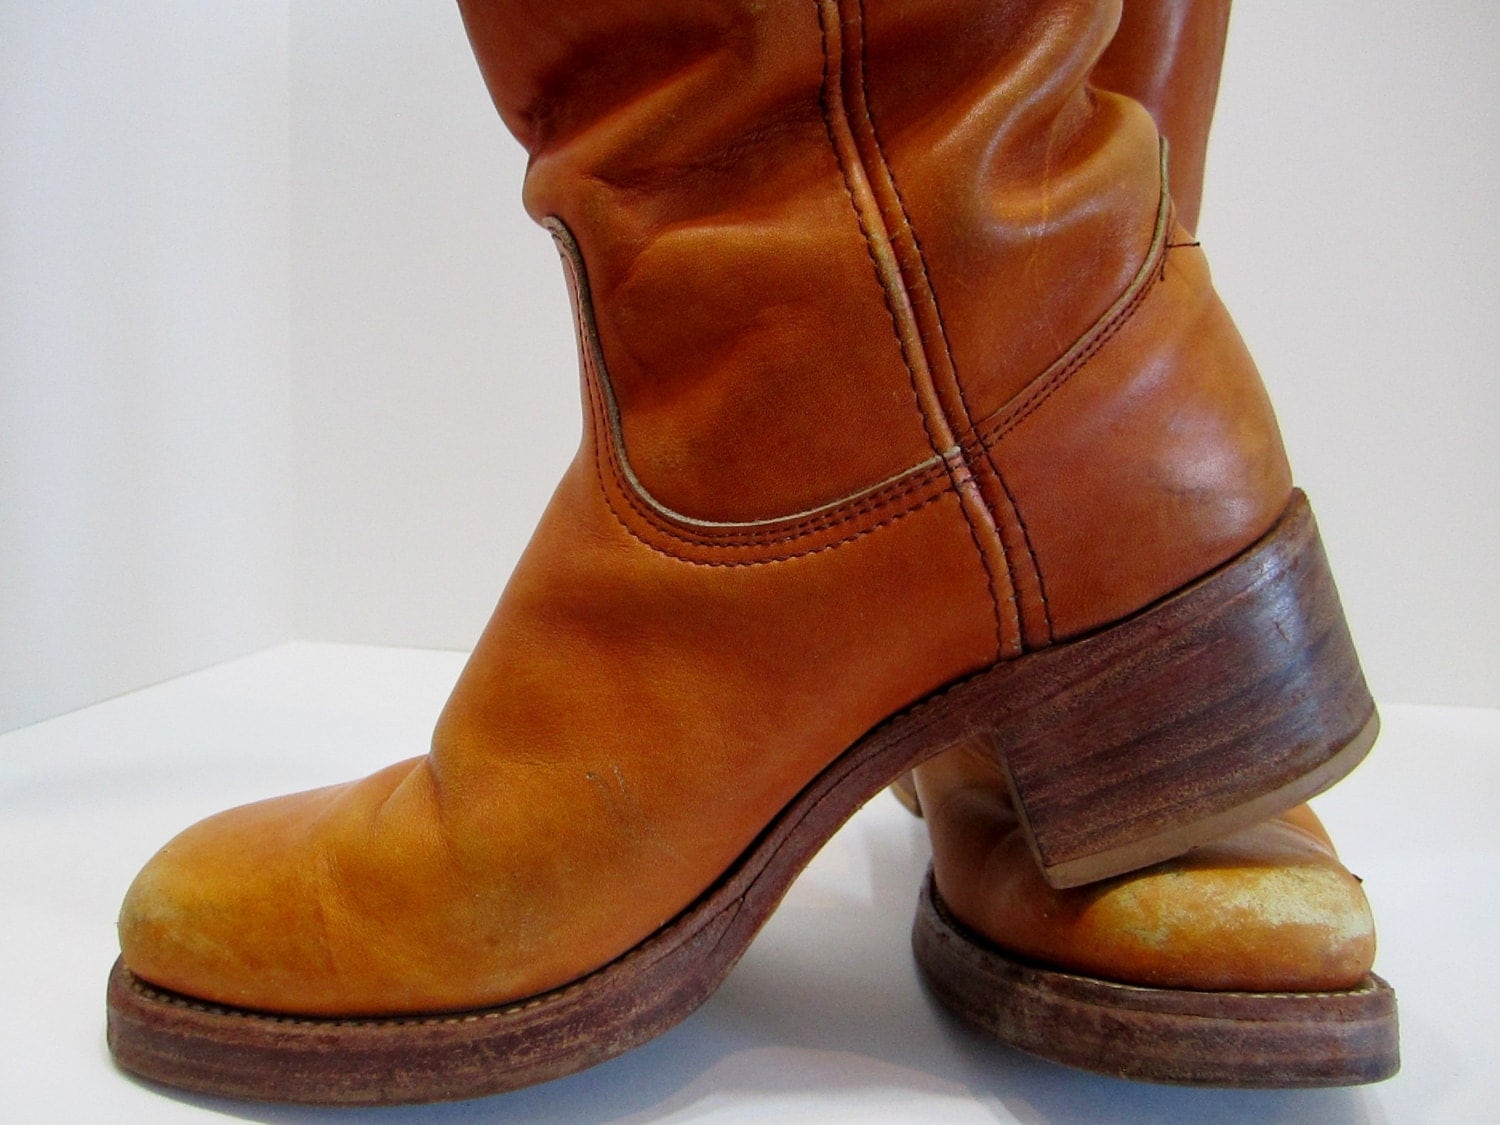 Frye Black Label leather campus boots Vintage 1970's